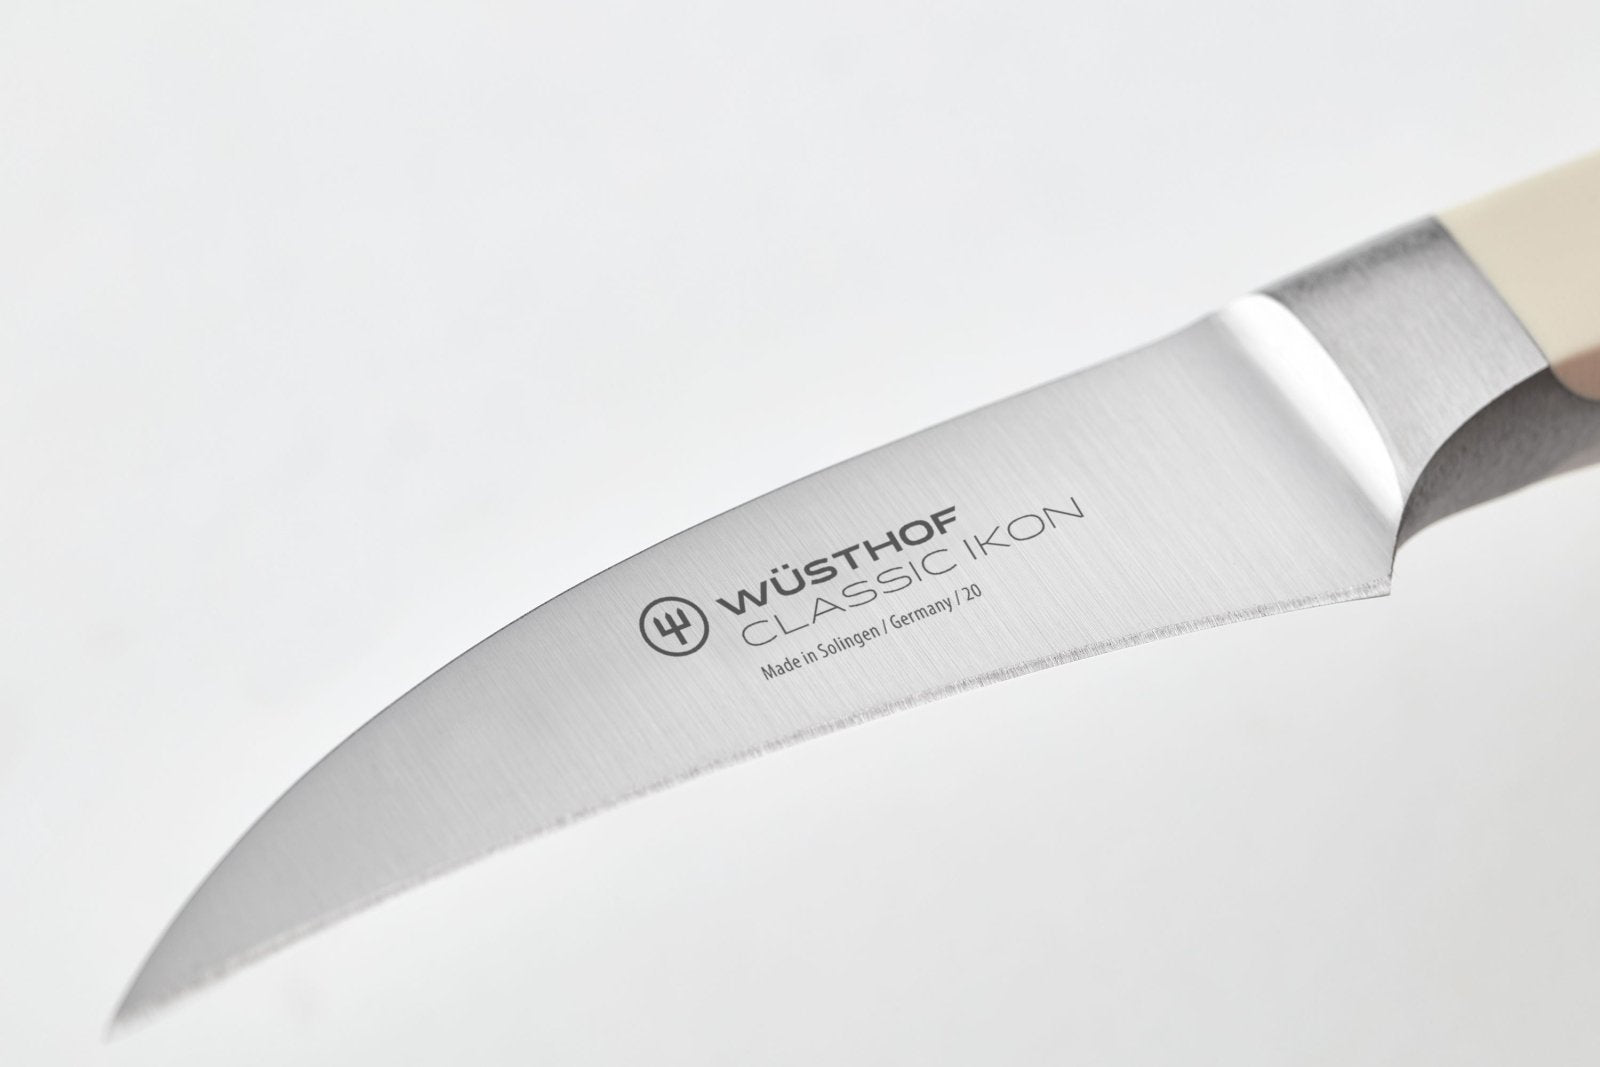 Wusthof Classic IKON Crème 7cm Peeling Knife - WT1040432207 - The Cotswold Knife Company